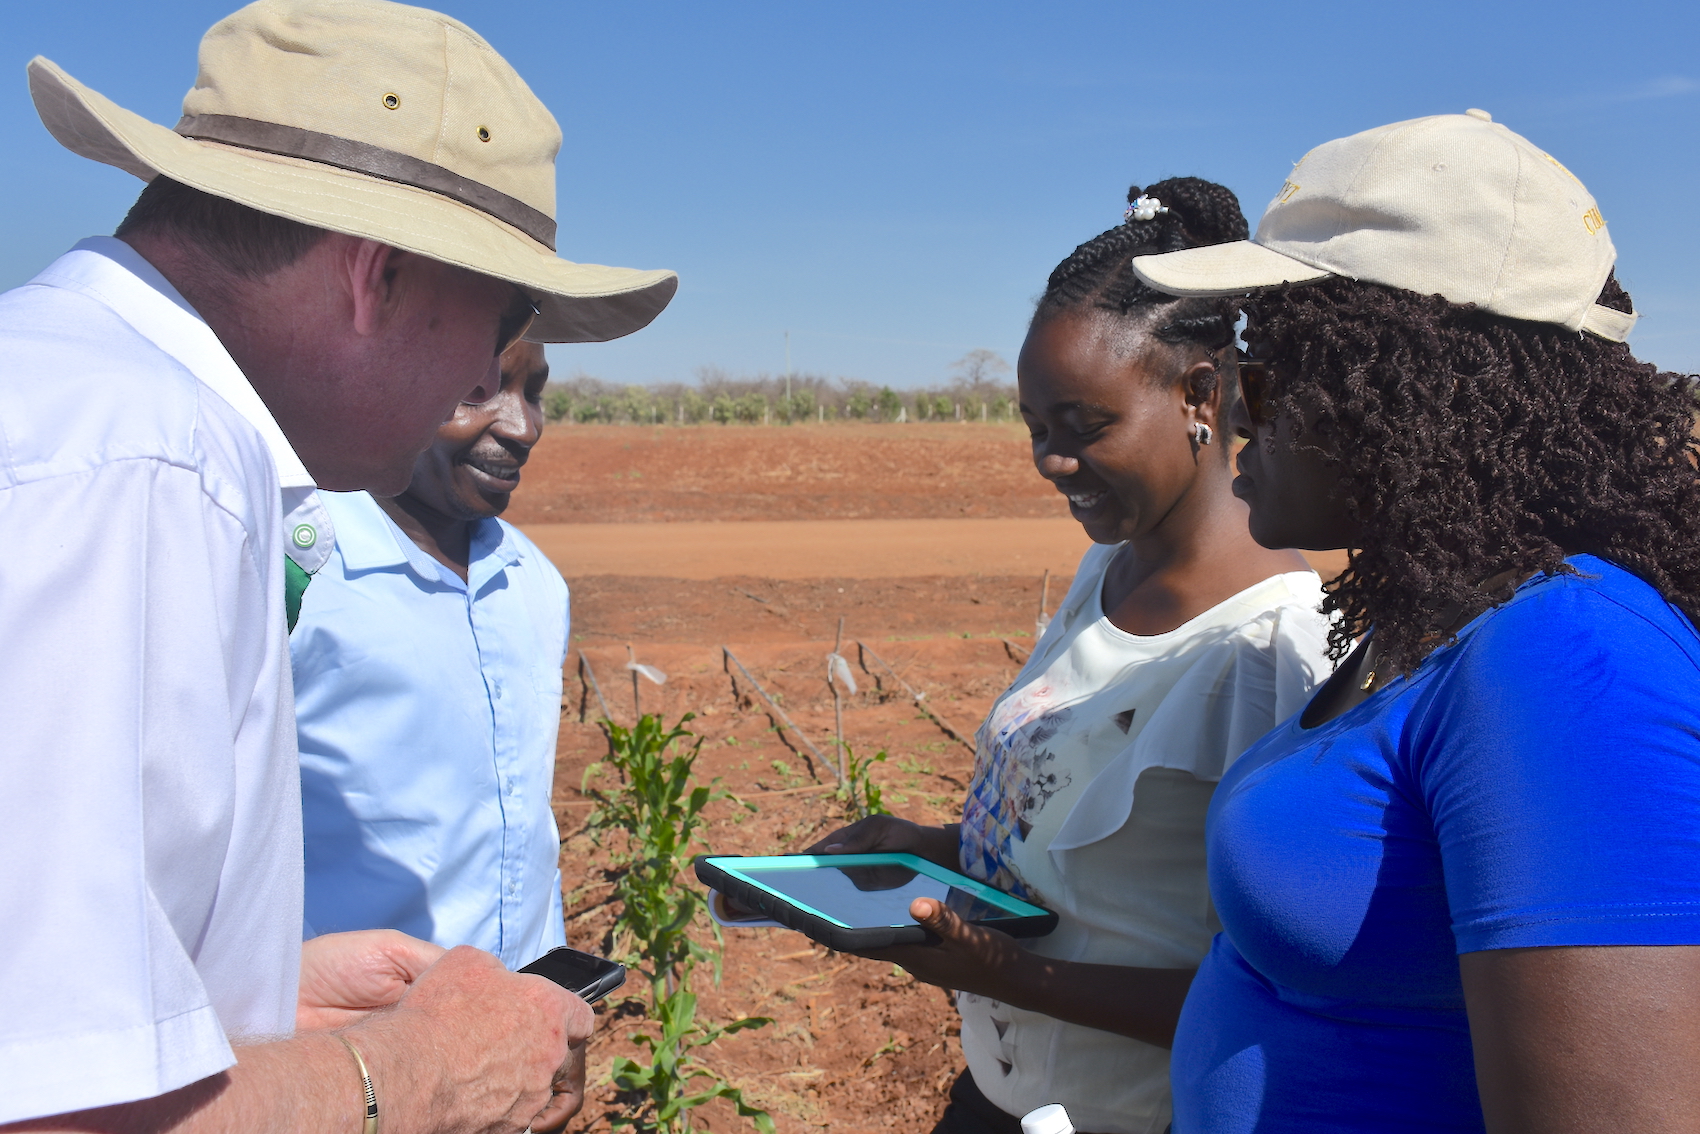 Partners test the SeedAssure app on a tablet during a field visit in Kiboko, Kenya. (Photo: Jerome Bossuet/CIMMYT)